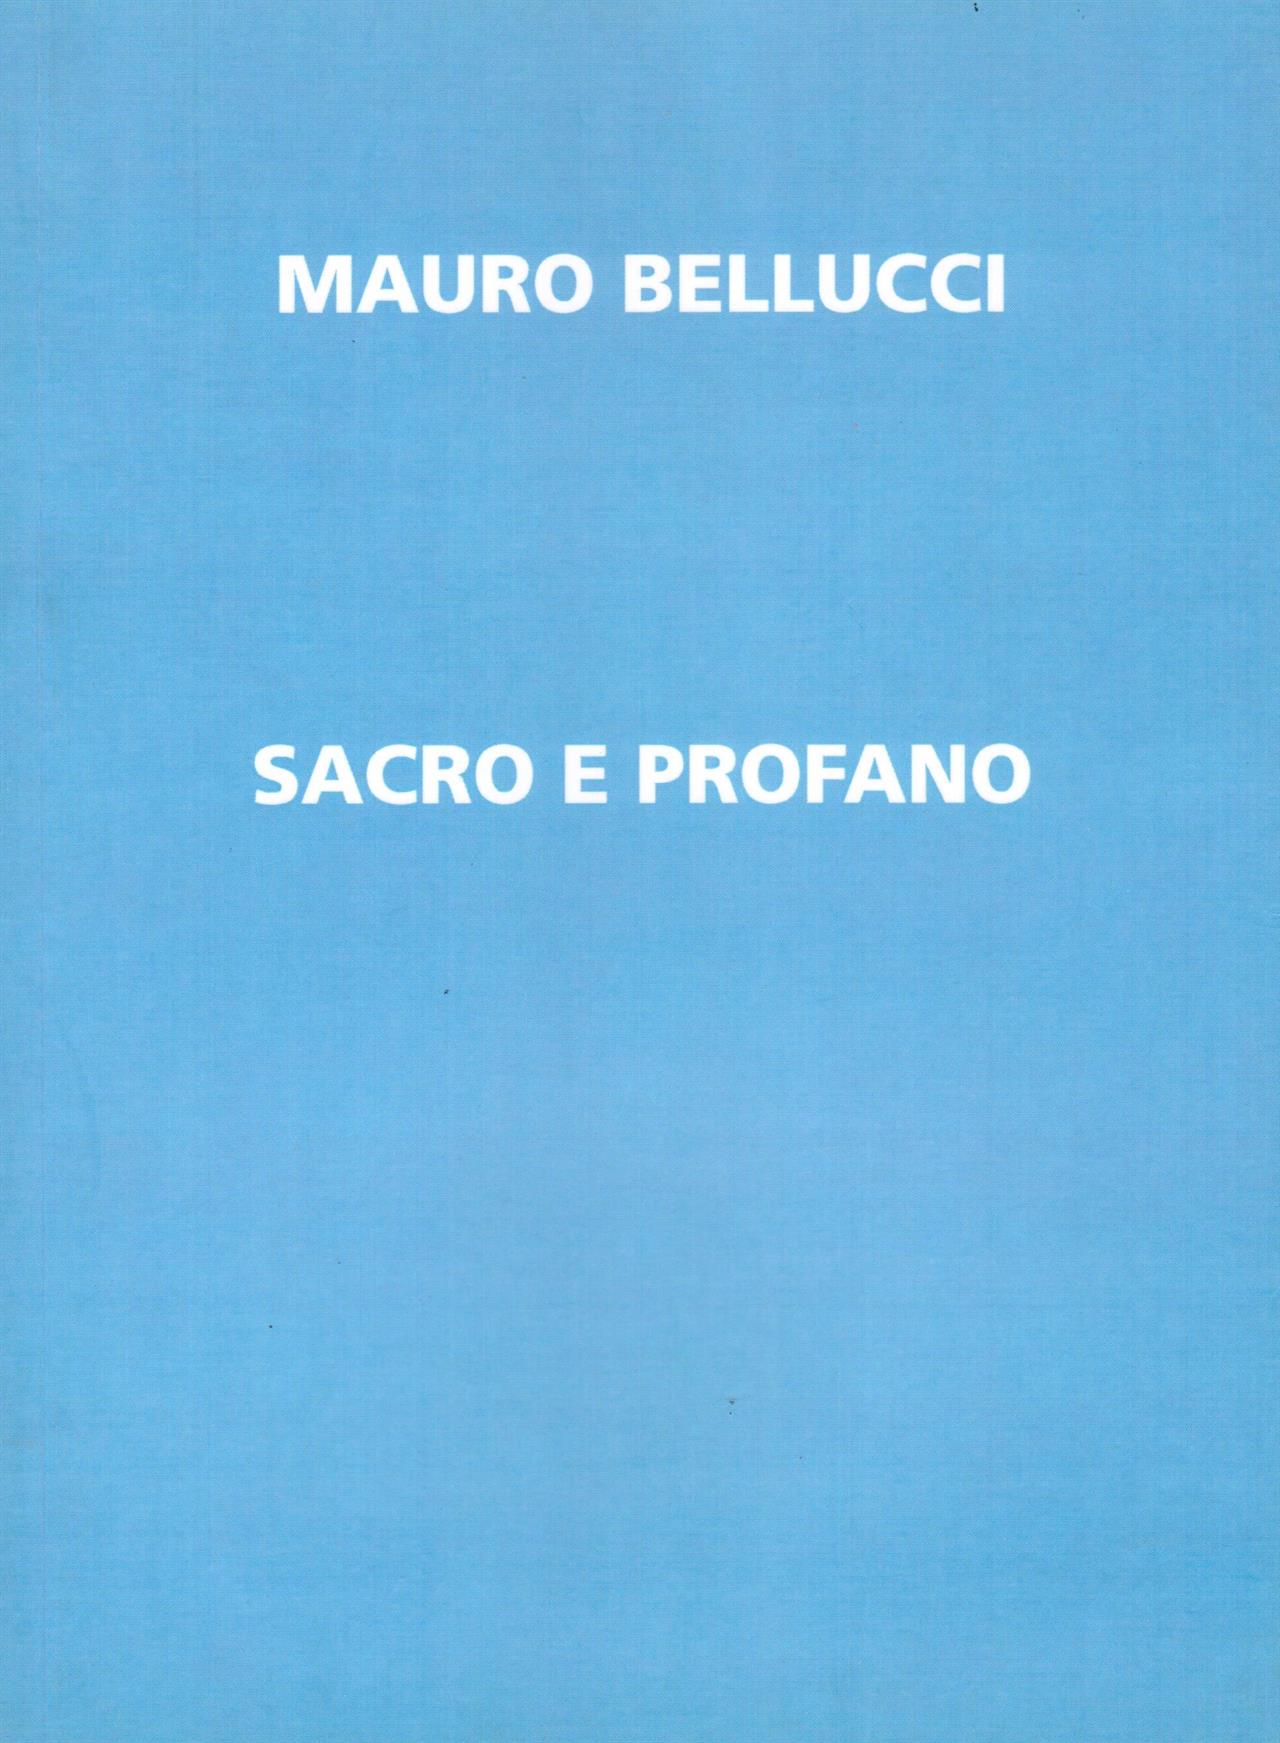 Mauro Bellucci